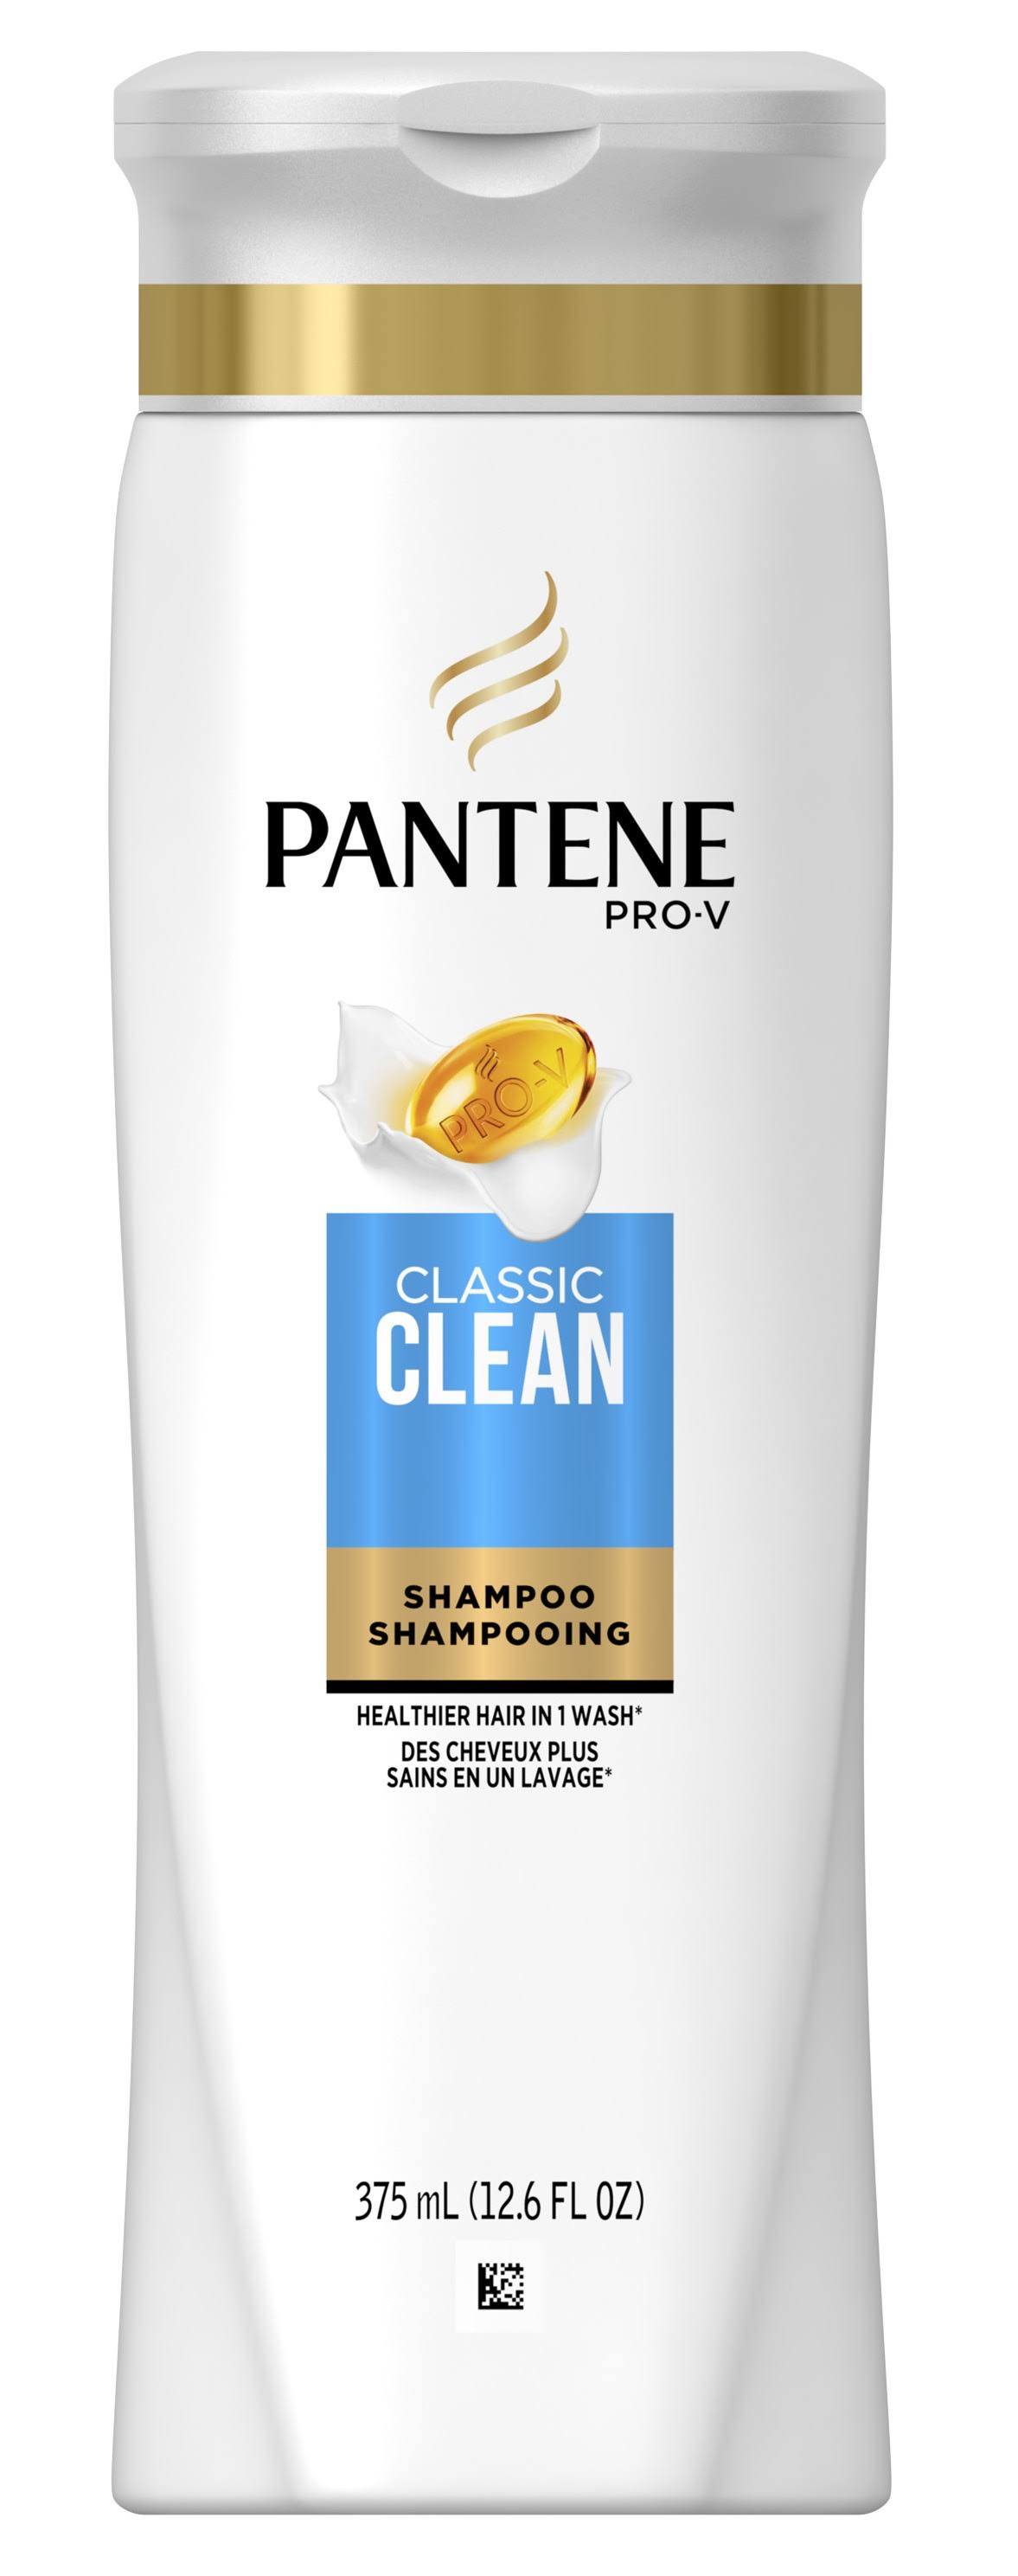 Pantene Pro-V Classic Clean Shampoo - 375ml